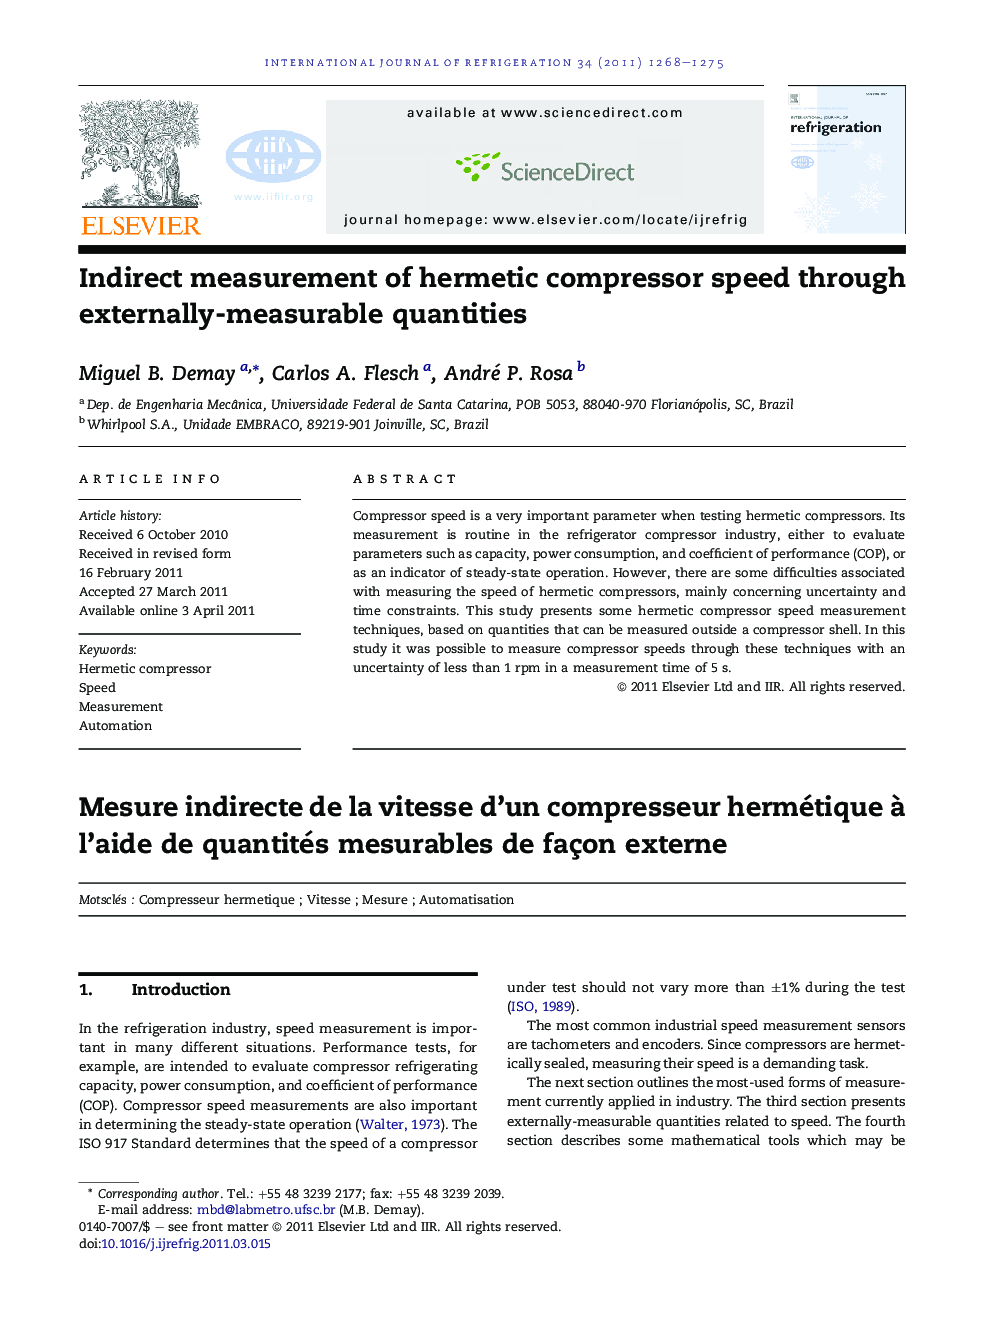 Indirect measurement of hermetic compressor speed through externally-measurable quantities